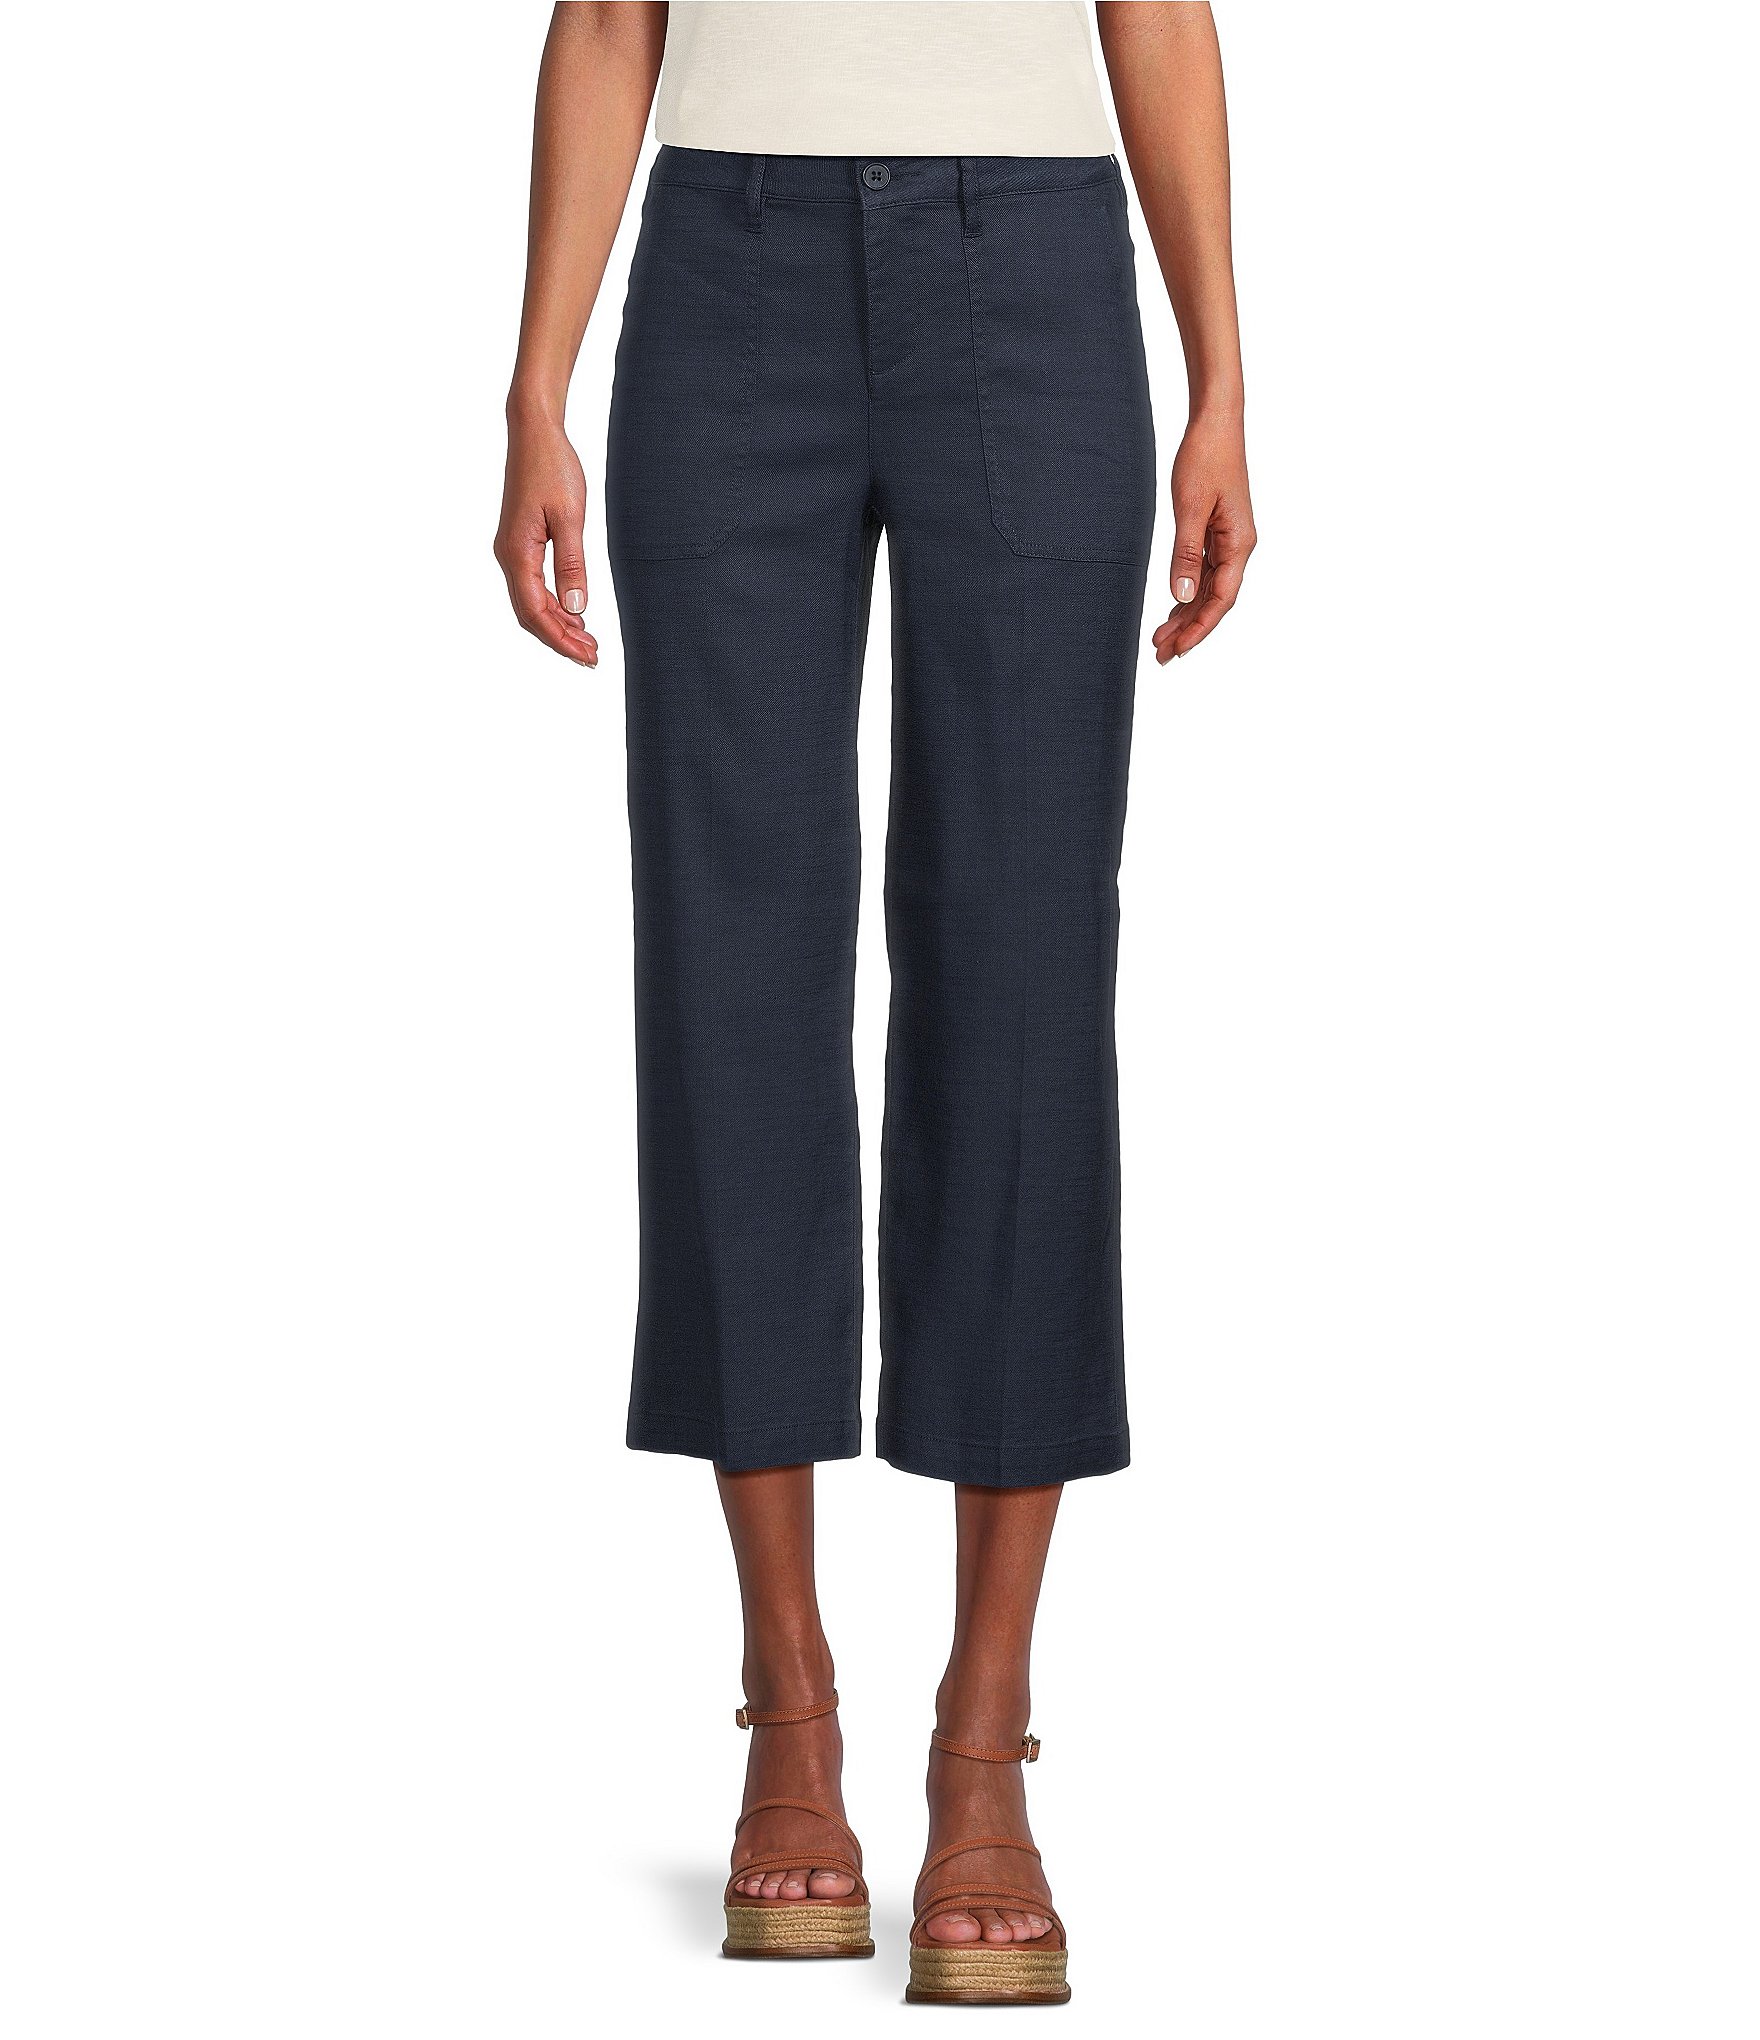 Cargo Capri Pants - Adjustable Length – Roadrunner Jeans Apparel